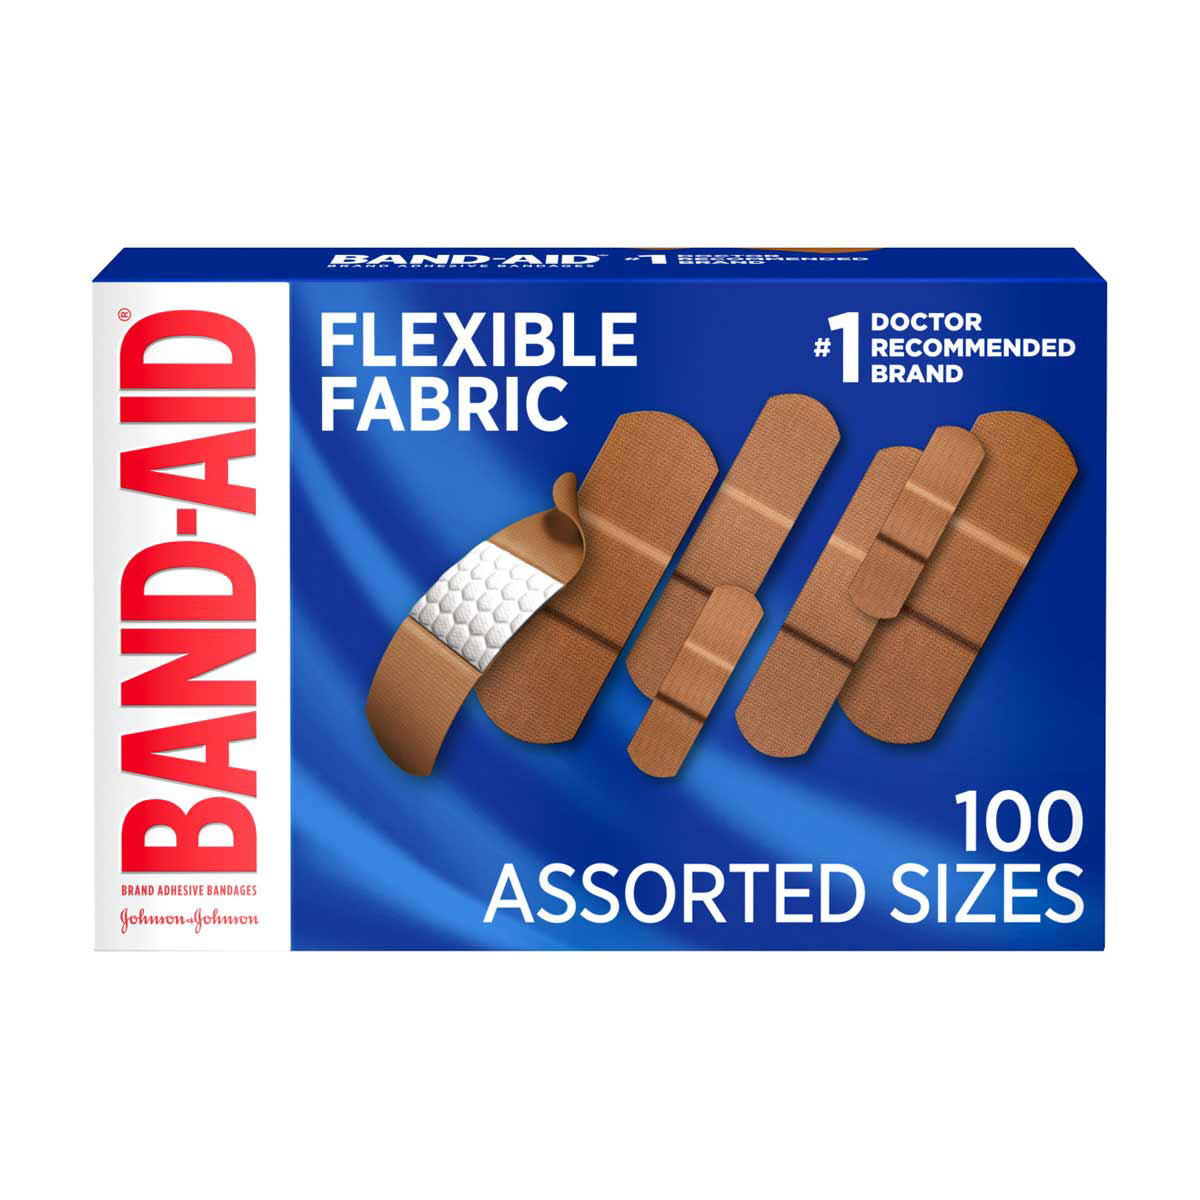 2-Band-Aid Brand Flexible Fabric Adhesive Bandages - 100 ct